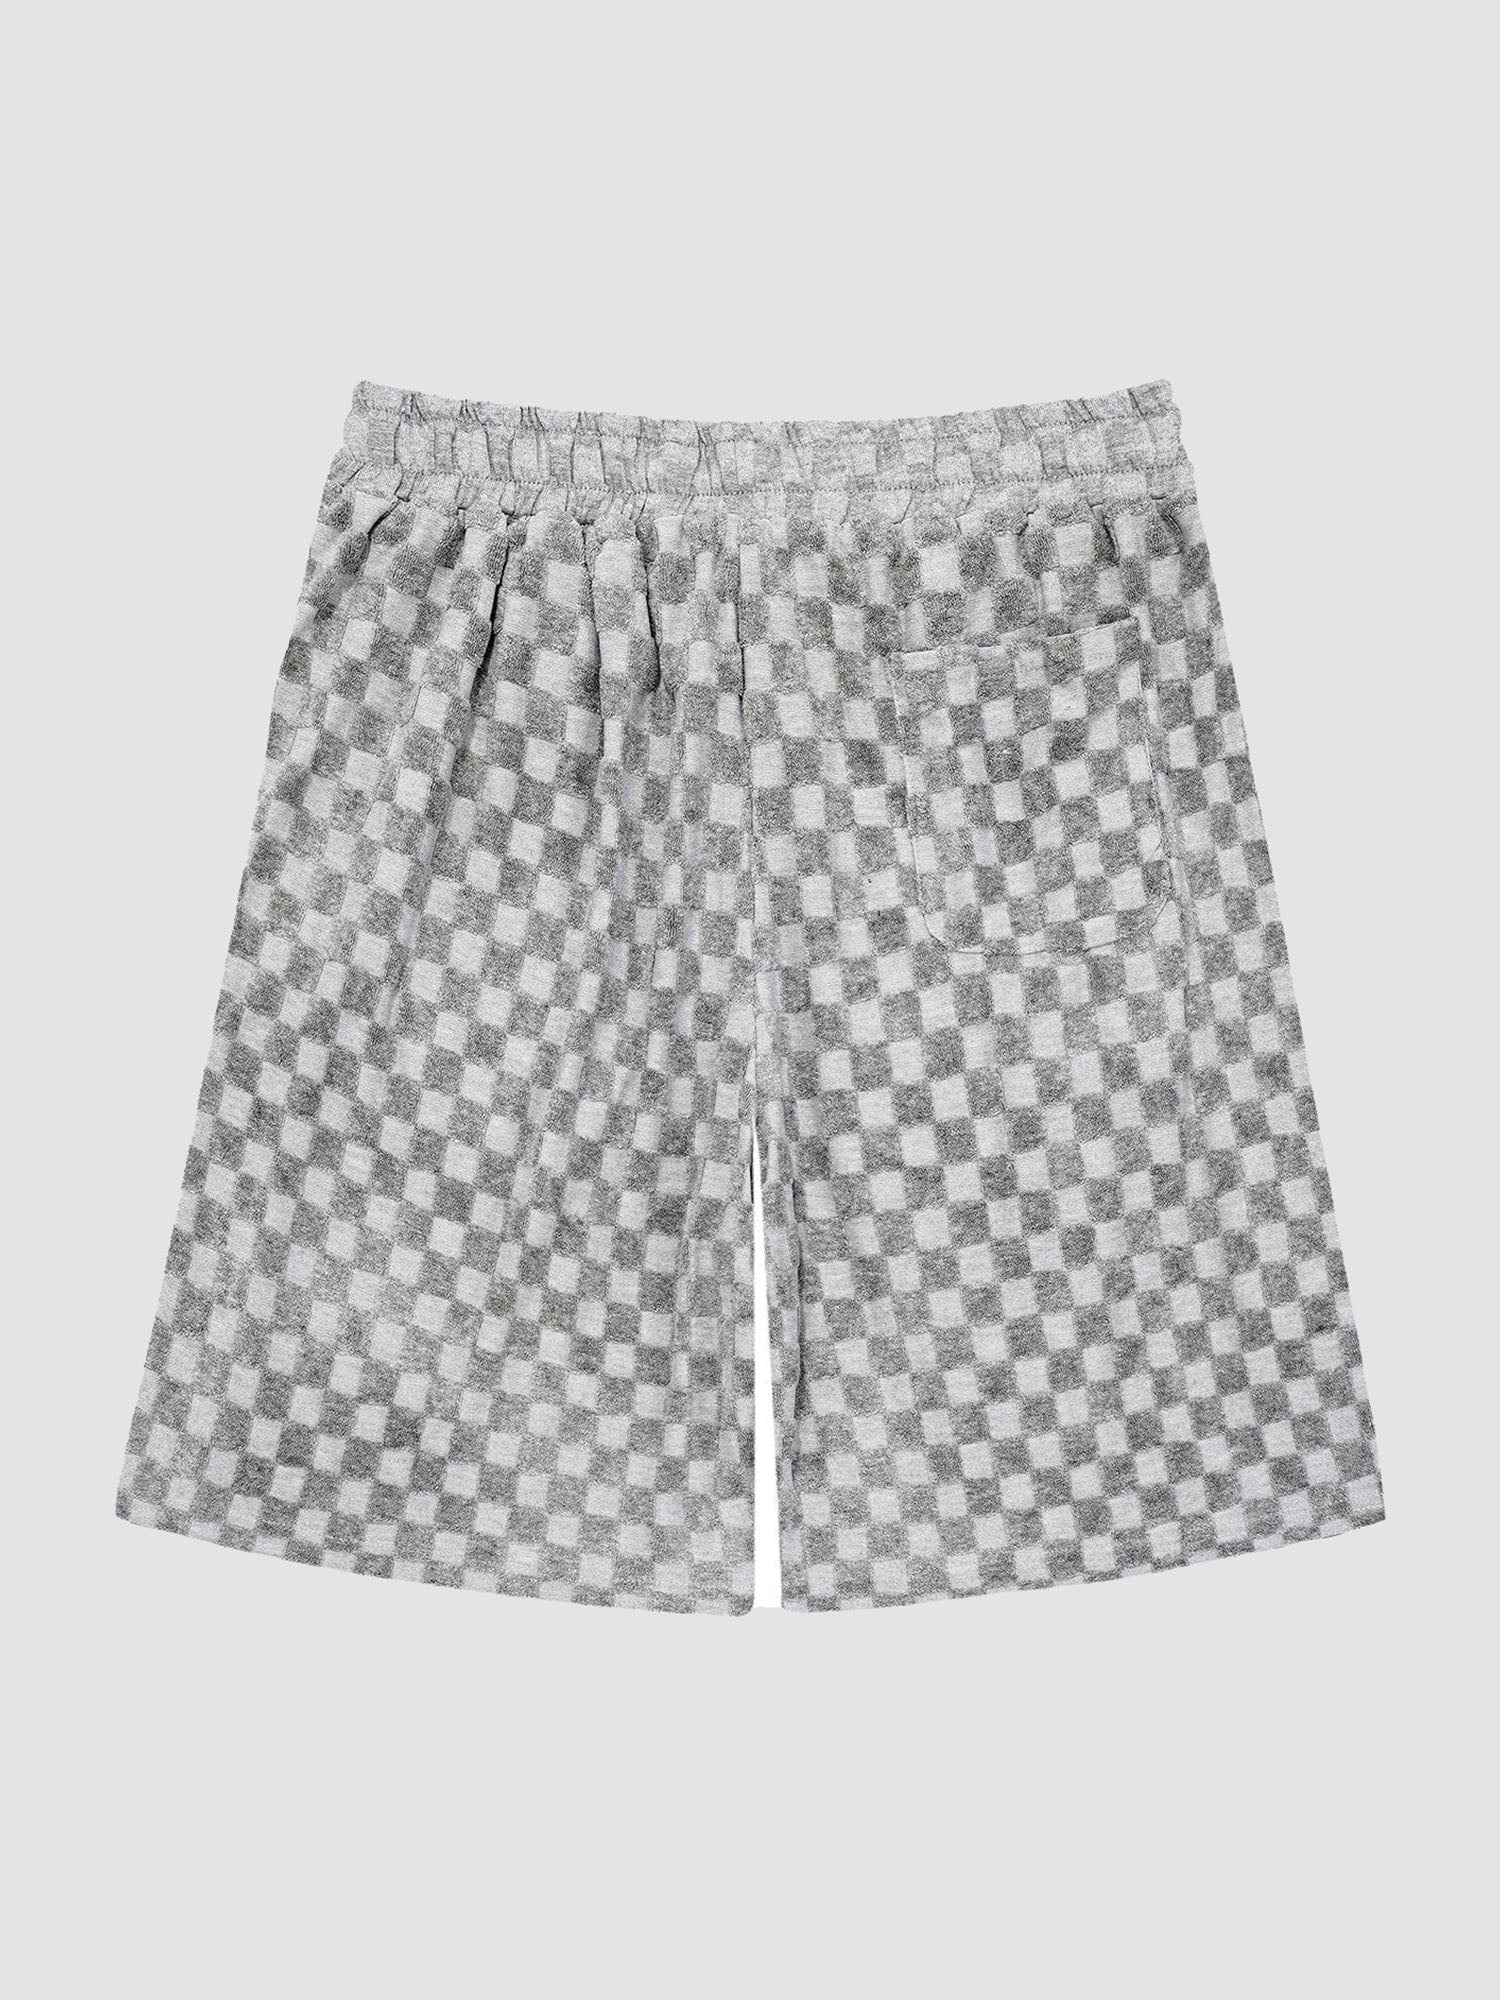 JUSTNOTAG Vintage Side Breast Checkerboard Shorts